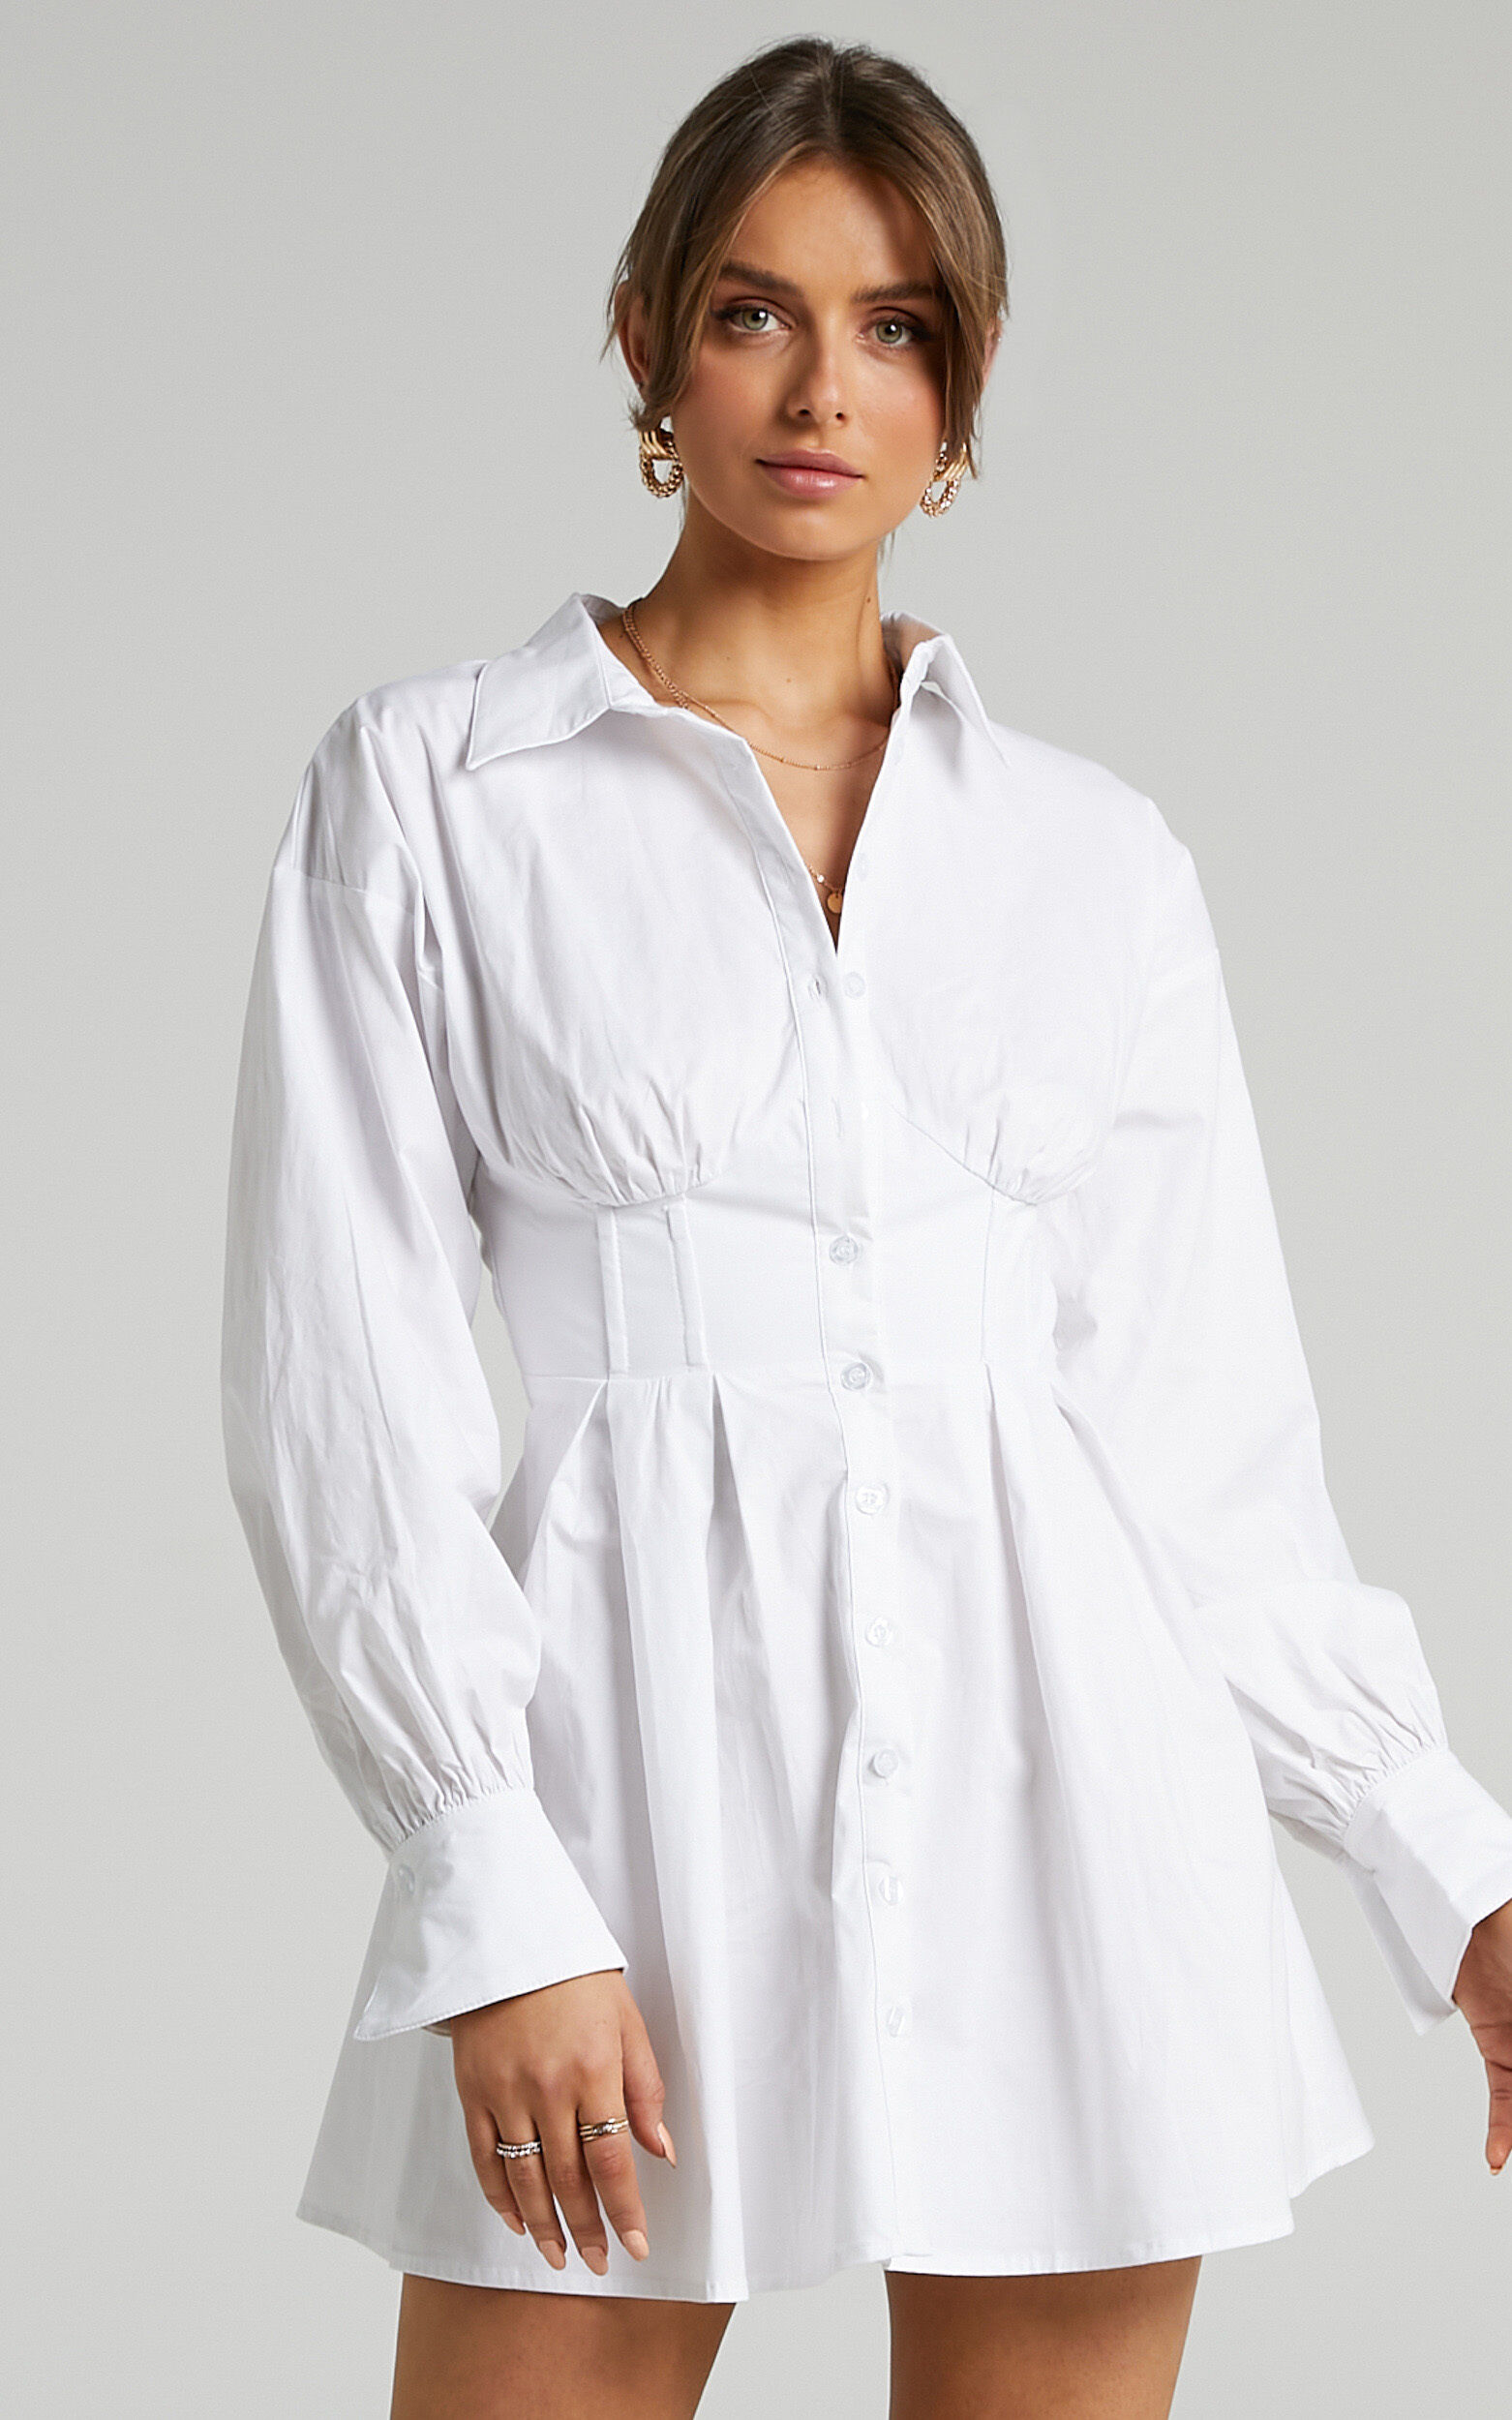 Claudette Corset Shirt Dress in White - 06, WHT2, super-hi-res image number null